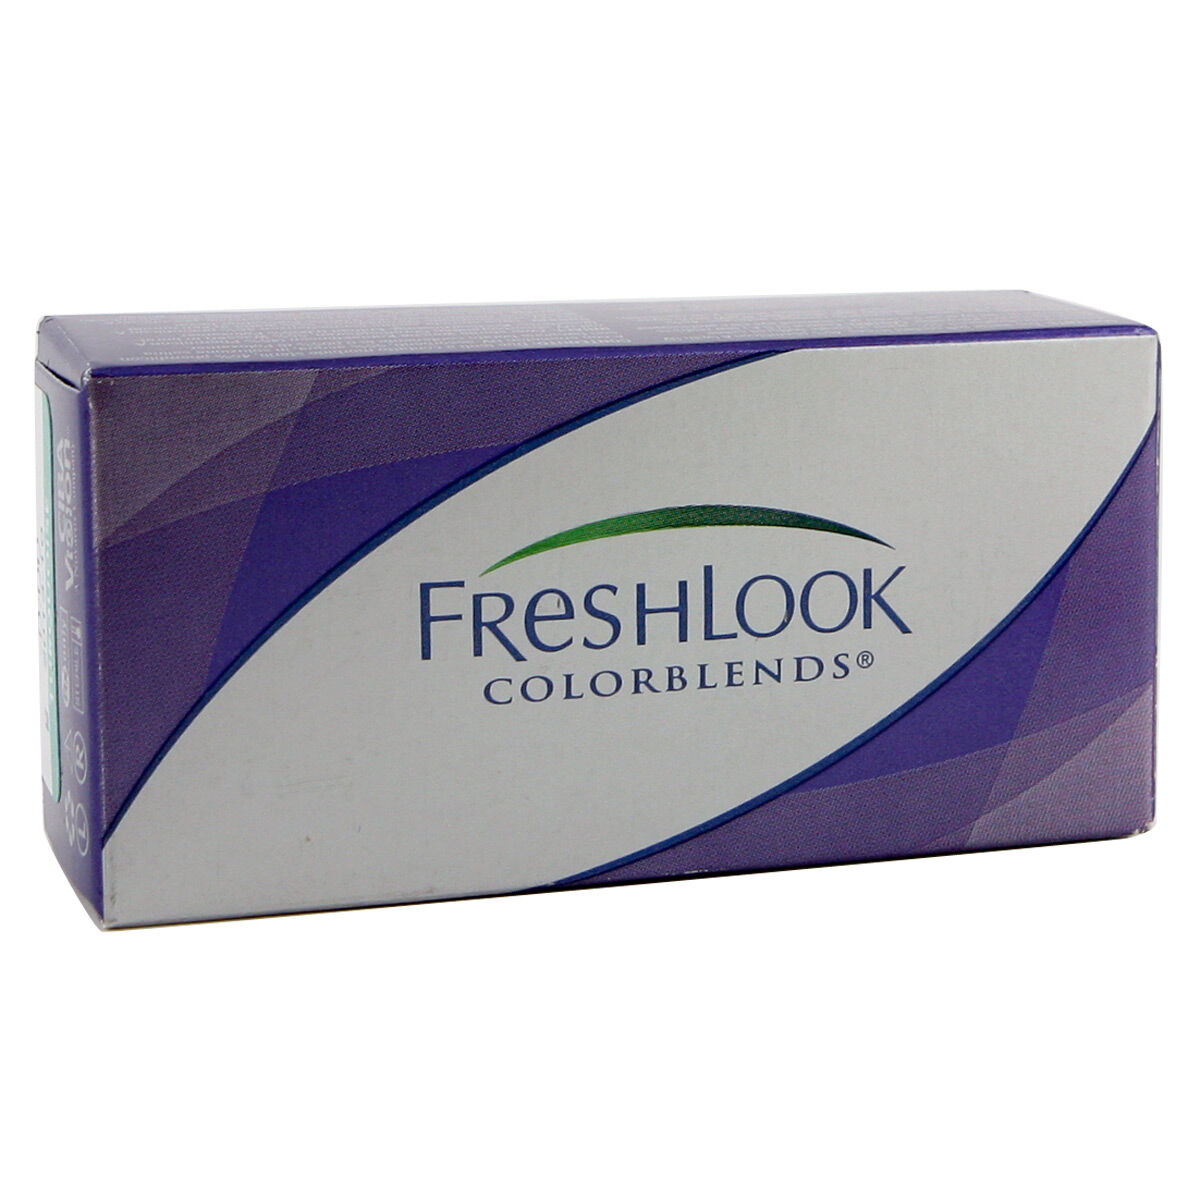 Alcon Freshlook Colorblends (2 Contact Lenses), True Saphire, Ciba Vision/Alcon, Monthly Coloured Lenses, Phemfilcon A